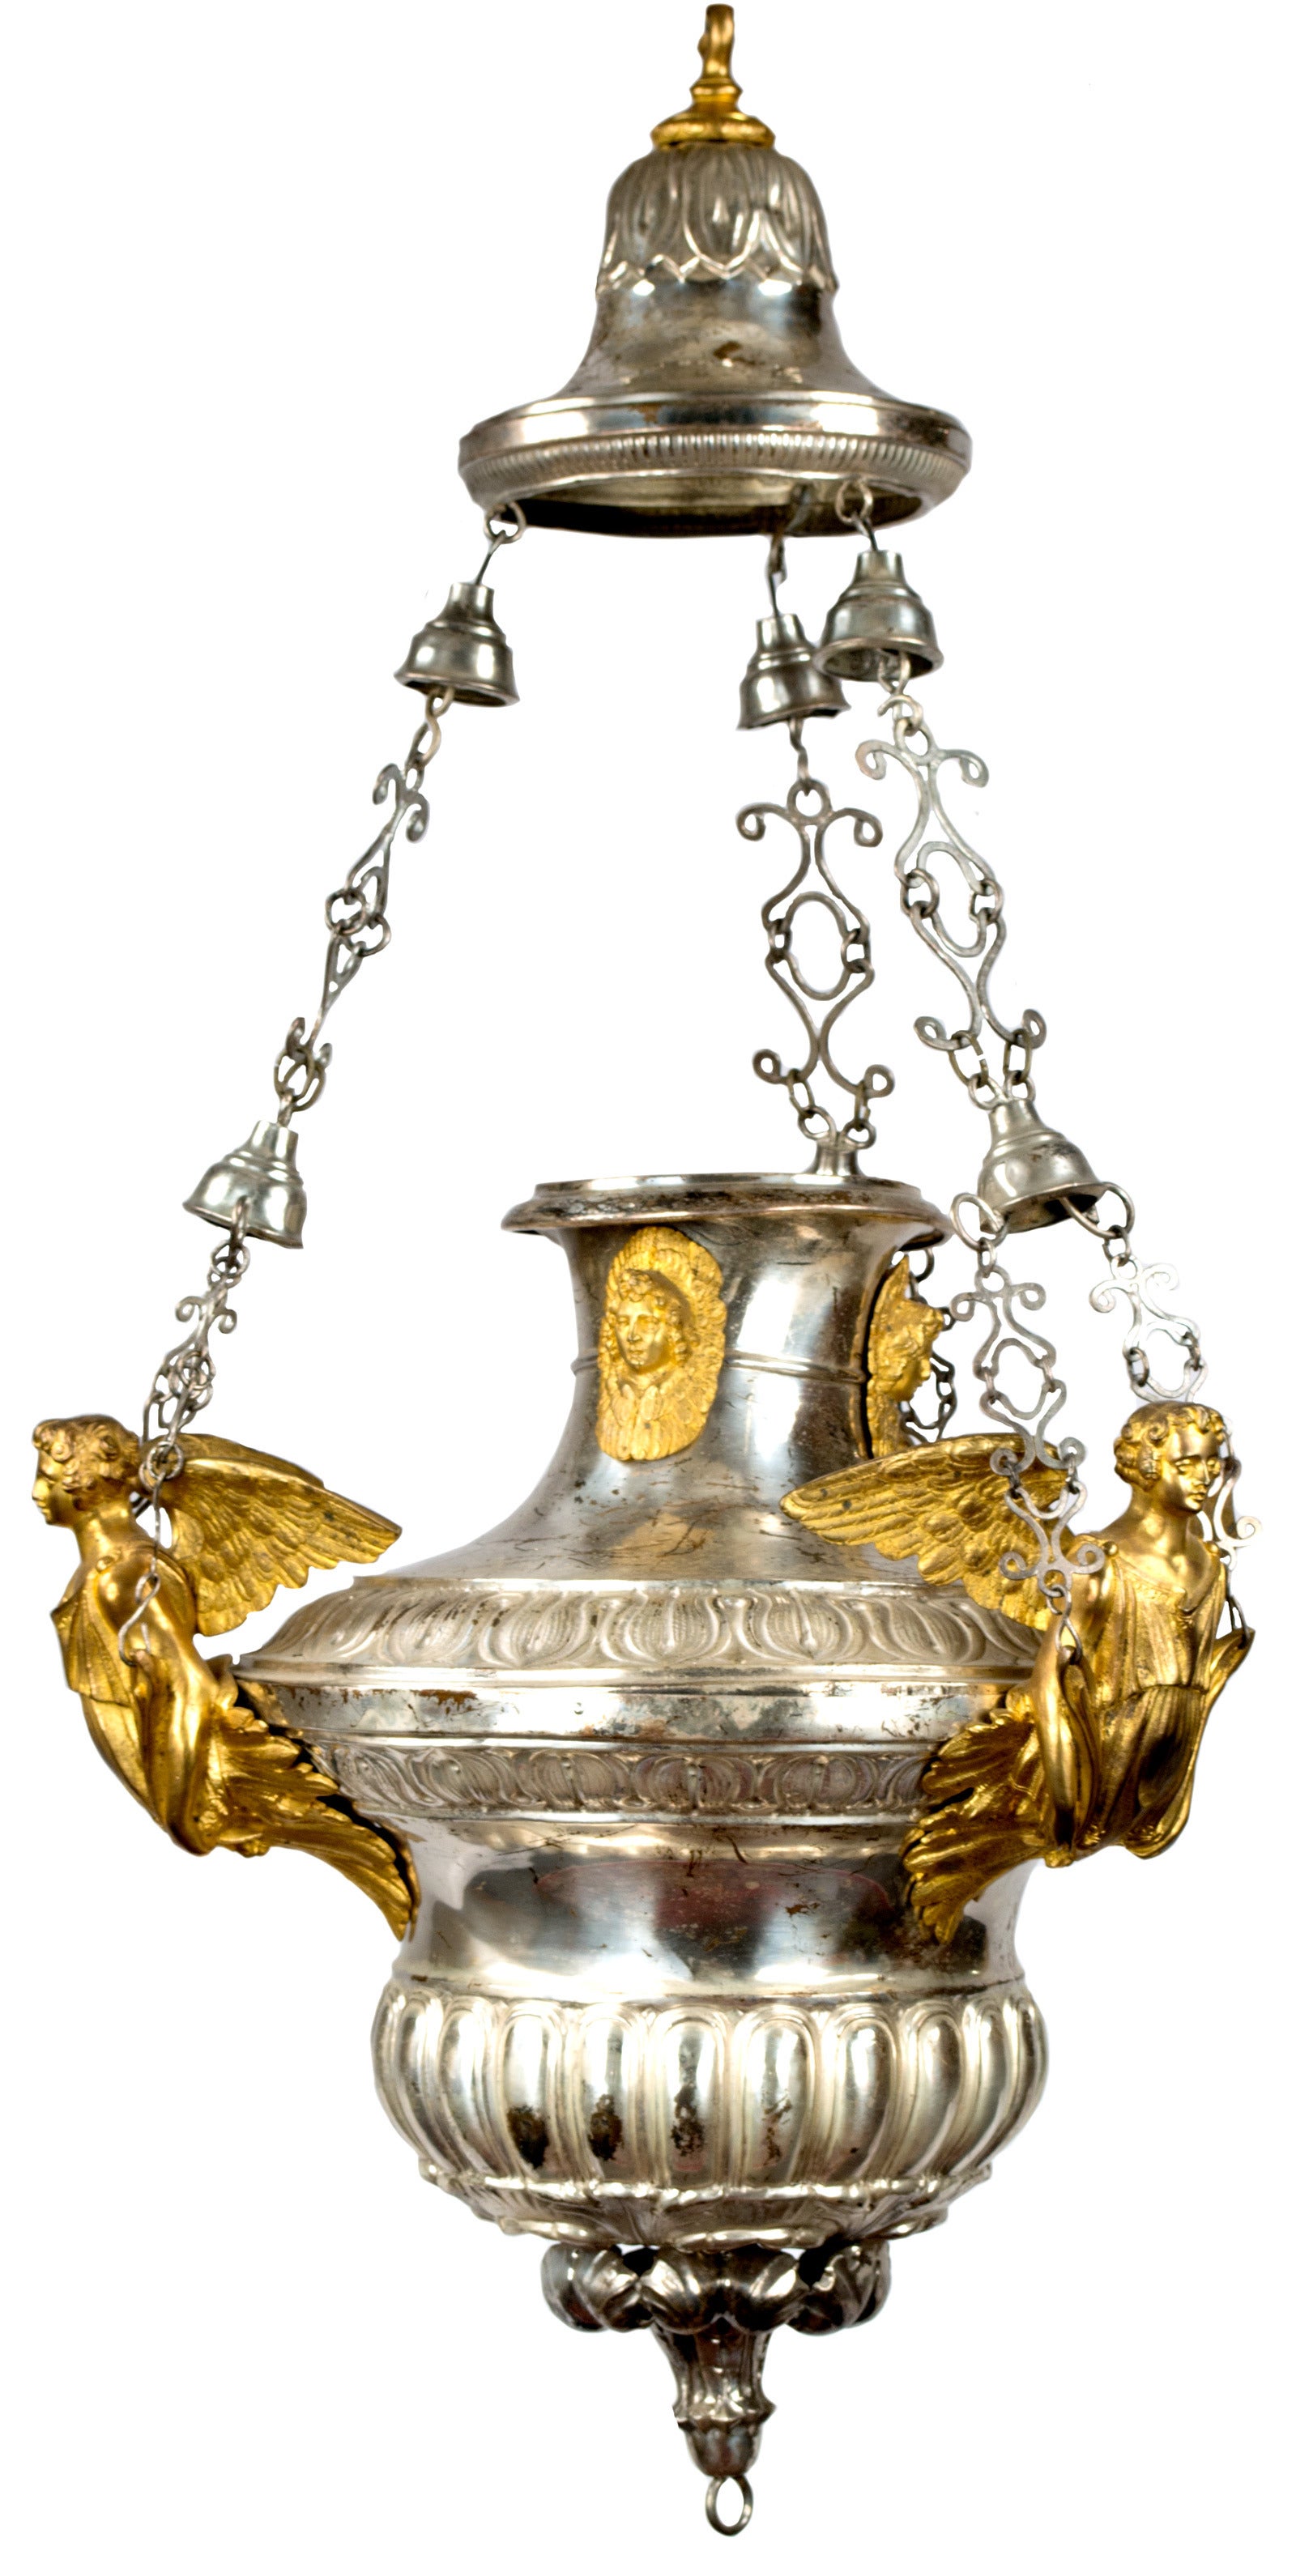 A large gilt censer chandelier with sculpted angels